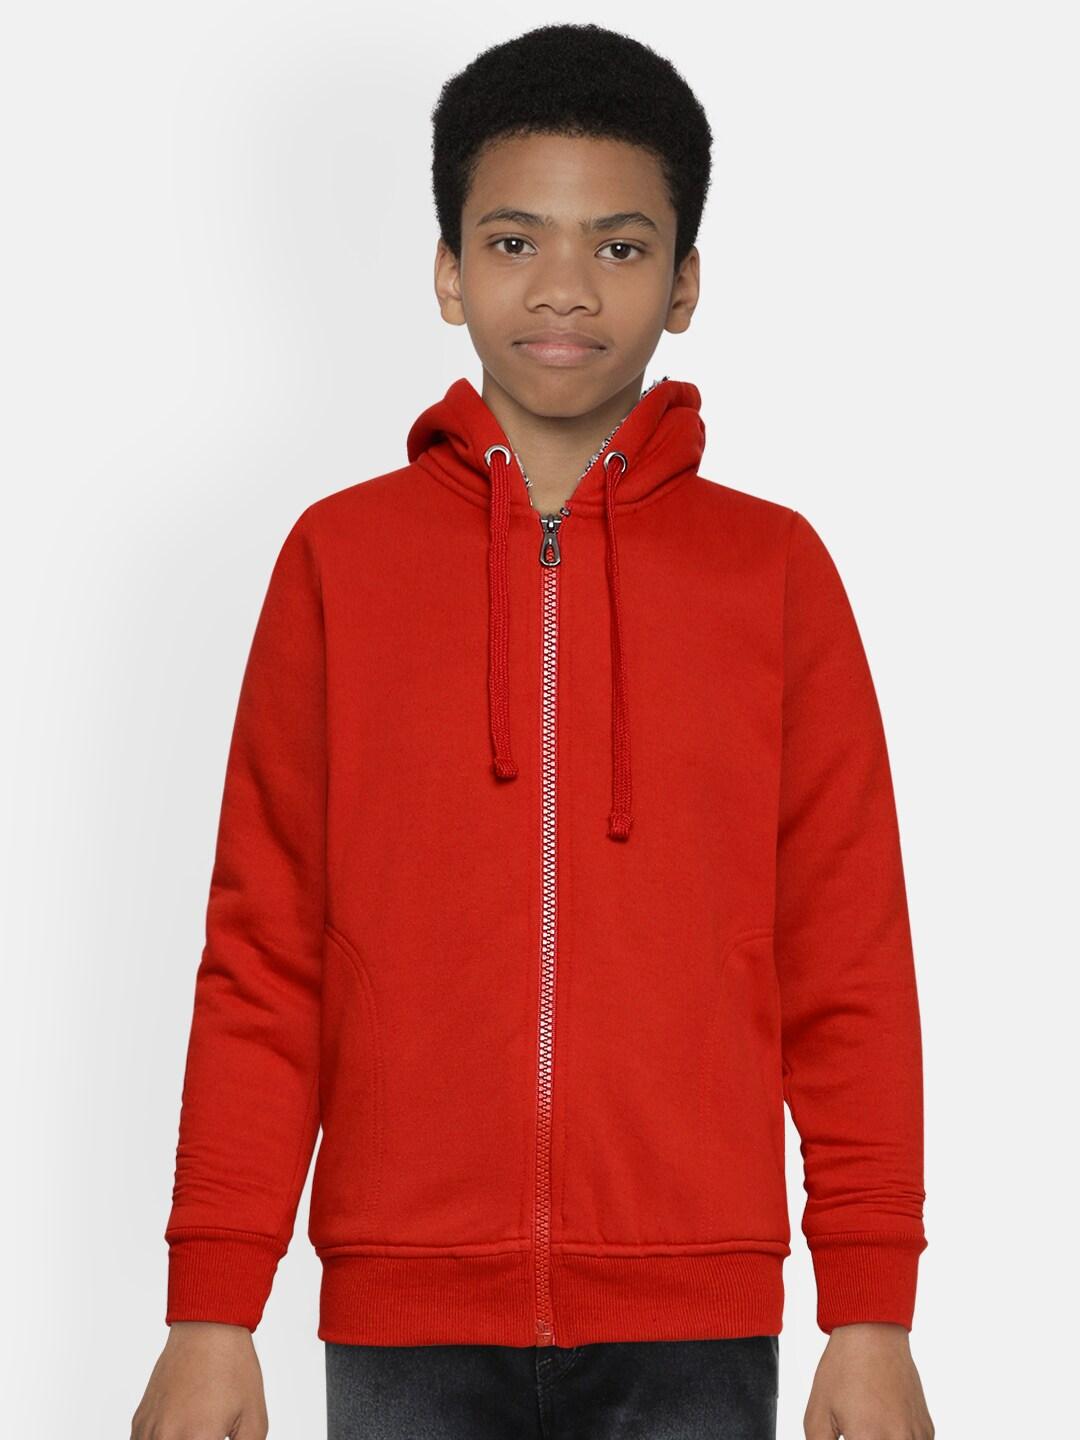 adbucks-boys-red-solid-hooded-sweatshirt